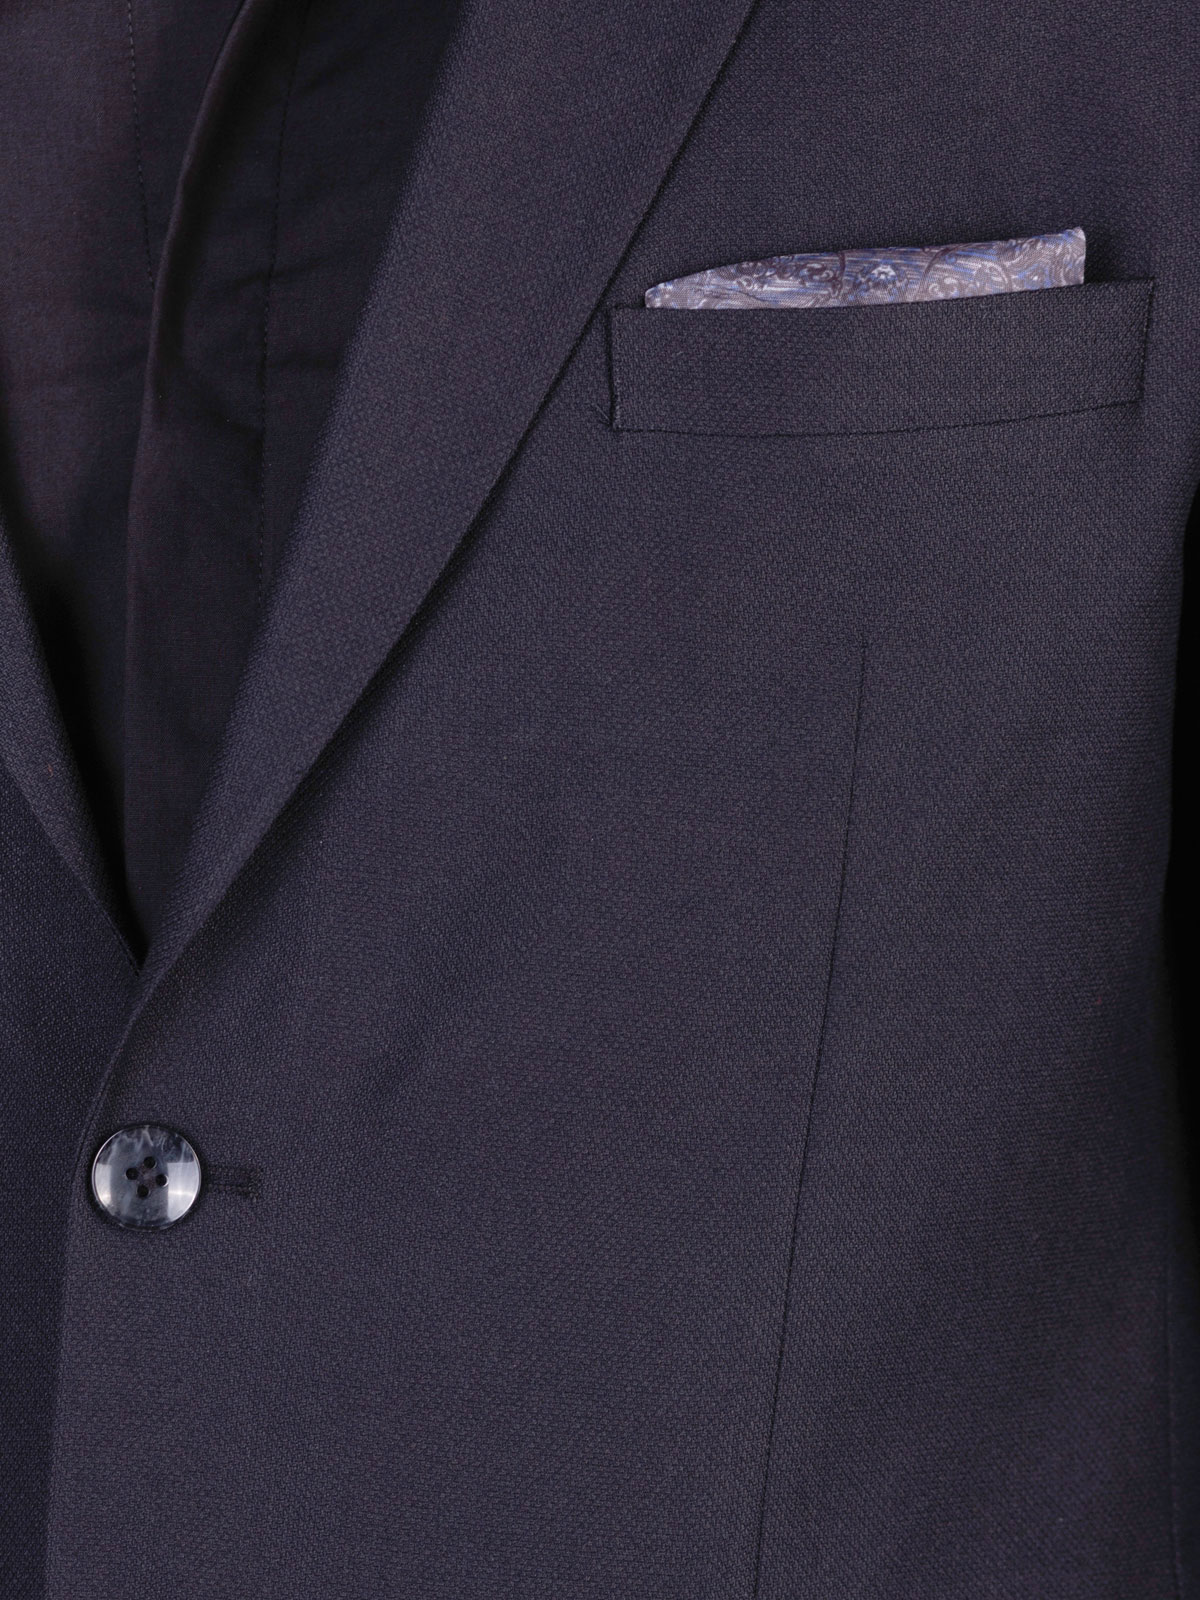 Elegant mens black suit - 68070 € 212.60 img4